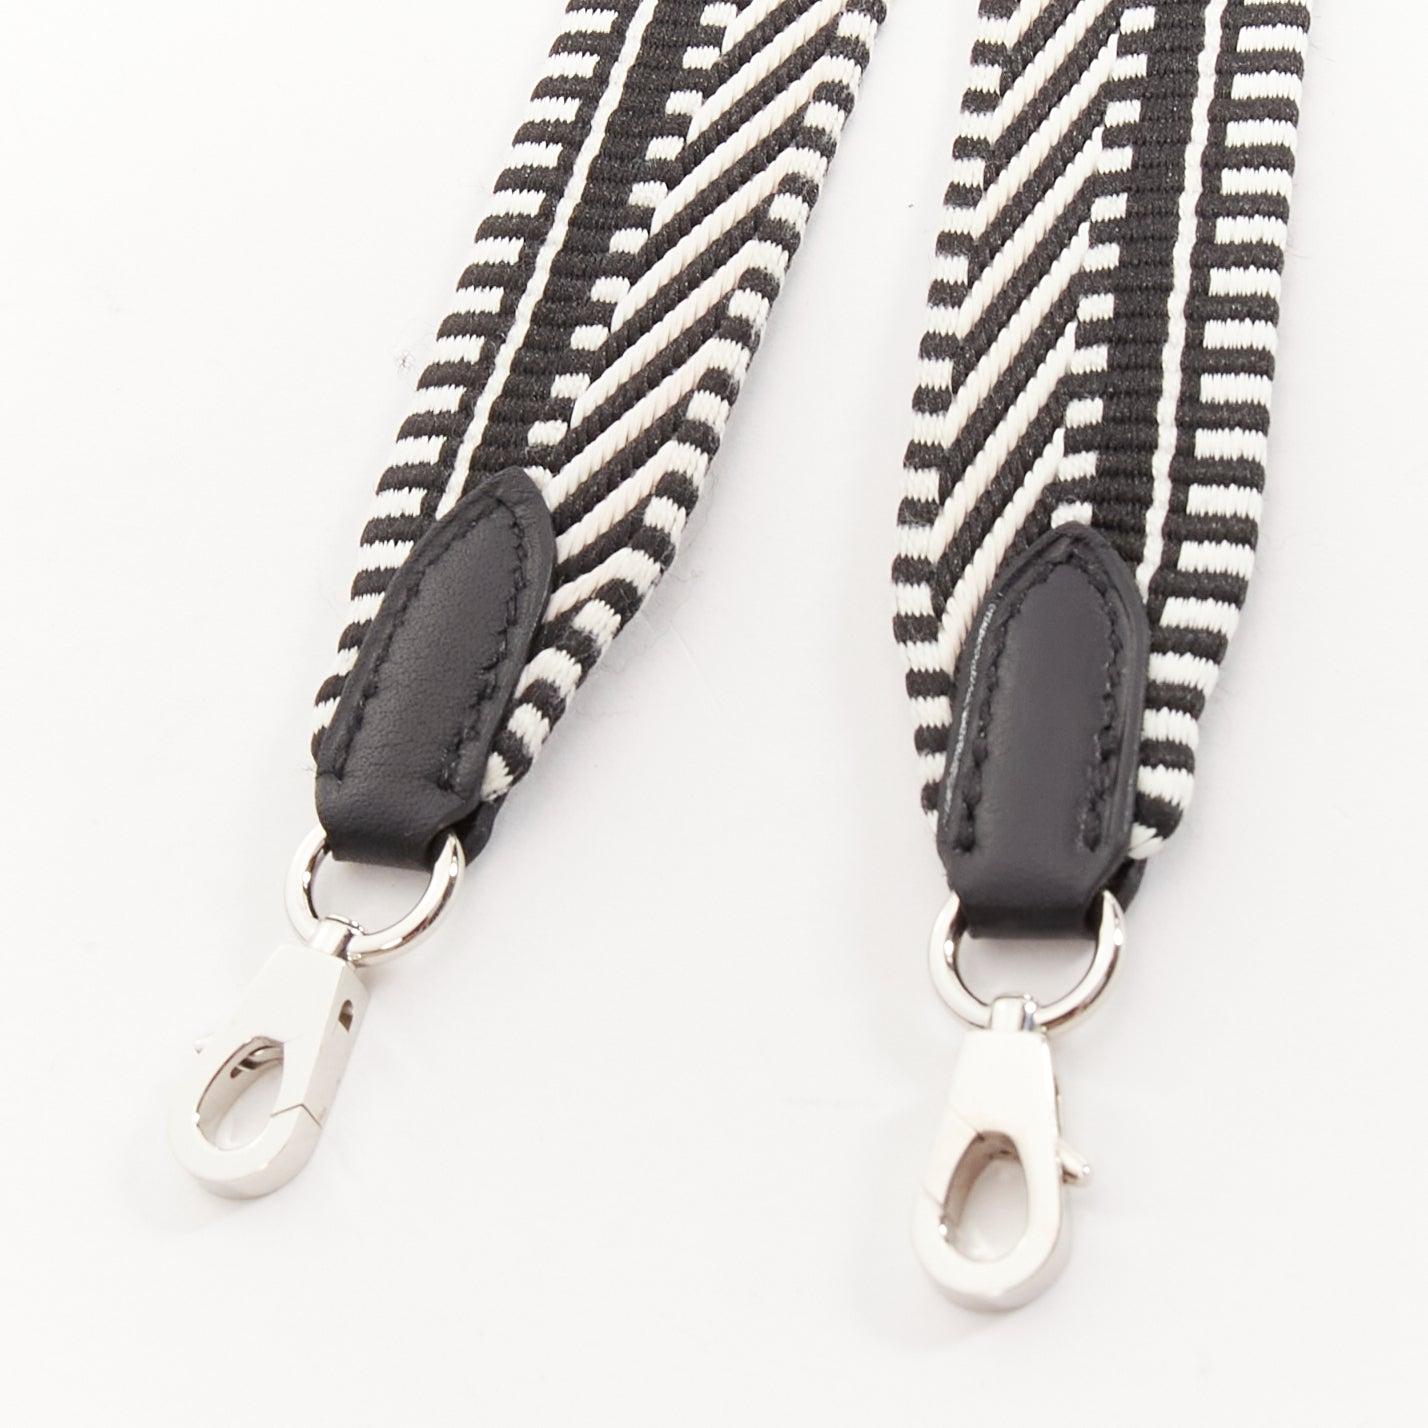 HERMES Sangle 25 black white chevron stripes woven silver hardware bag strap For Sale 2